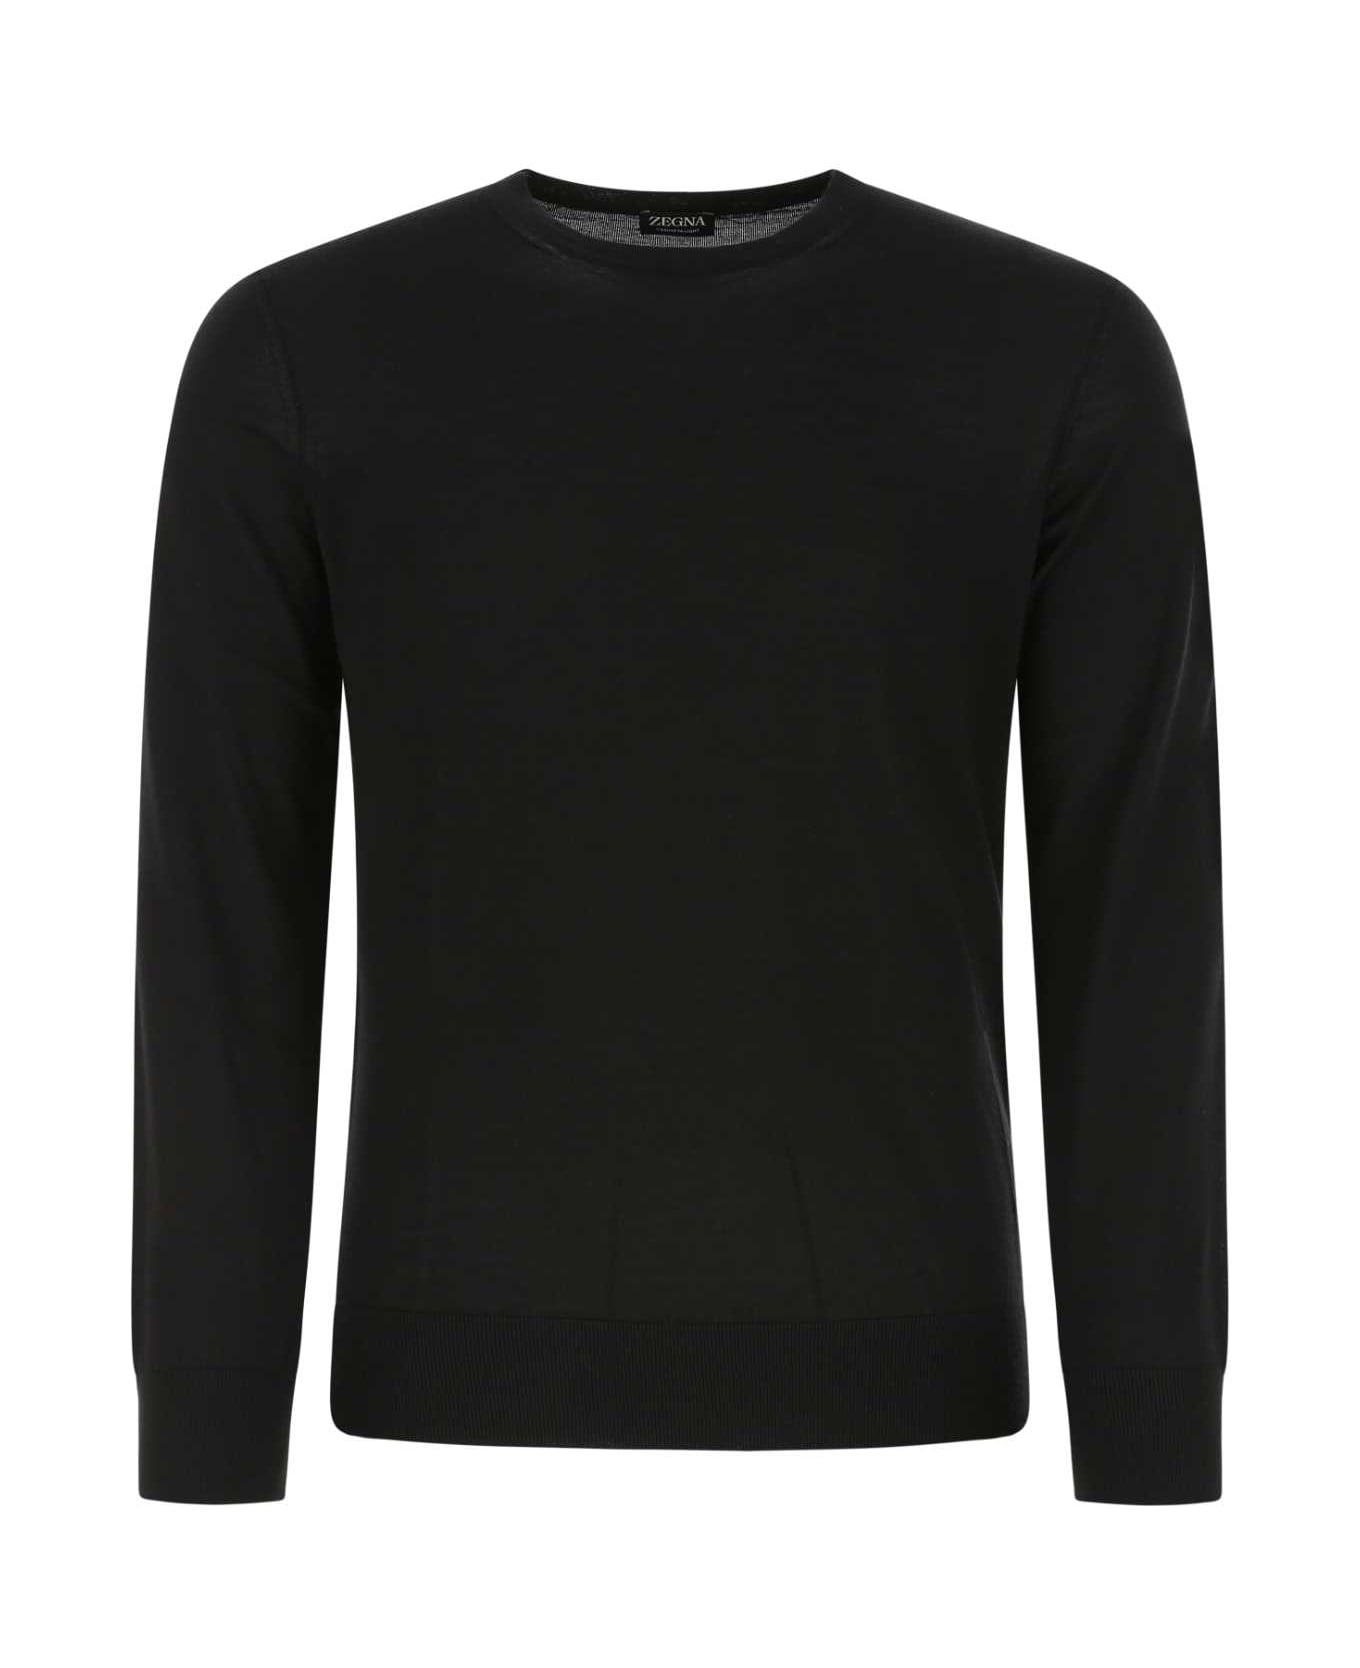 Zegna Black Cashmere Blend Sweater - K09 フリース